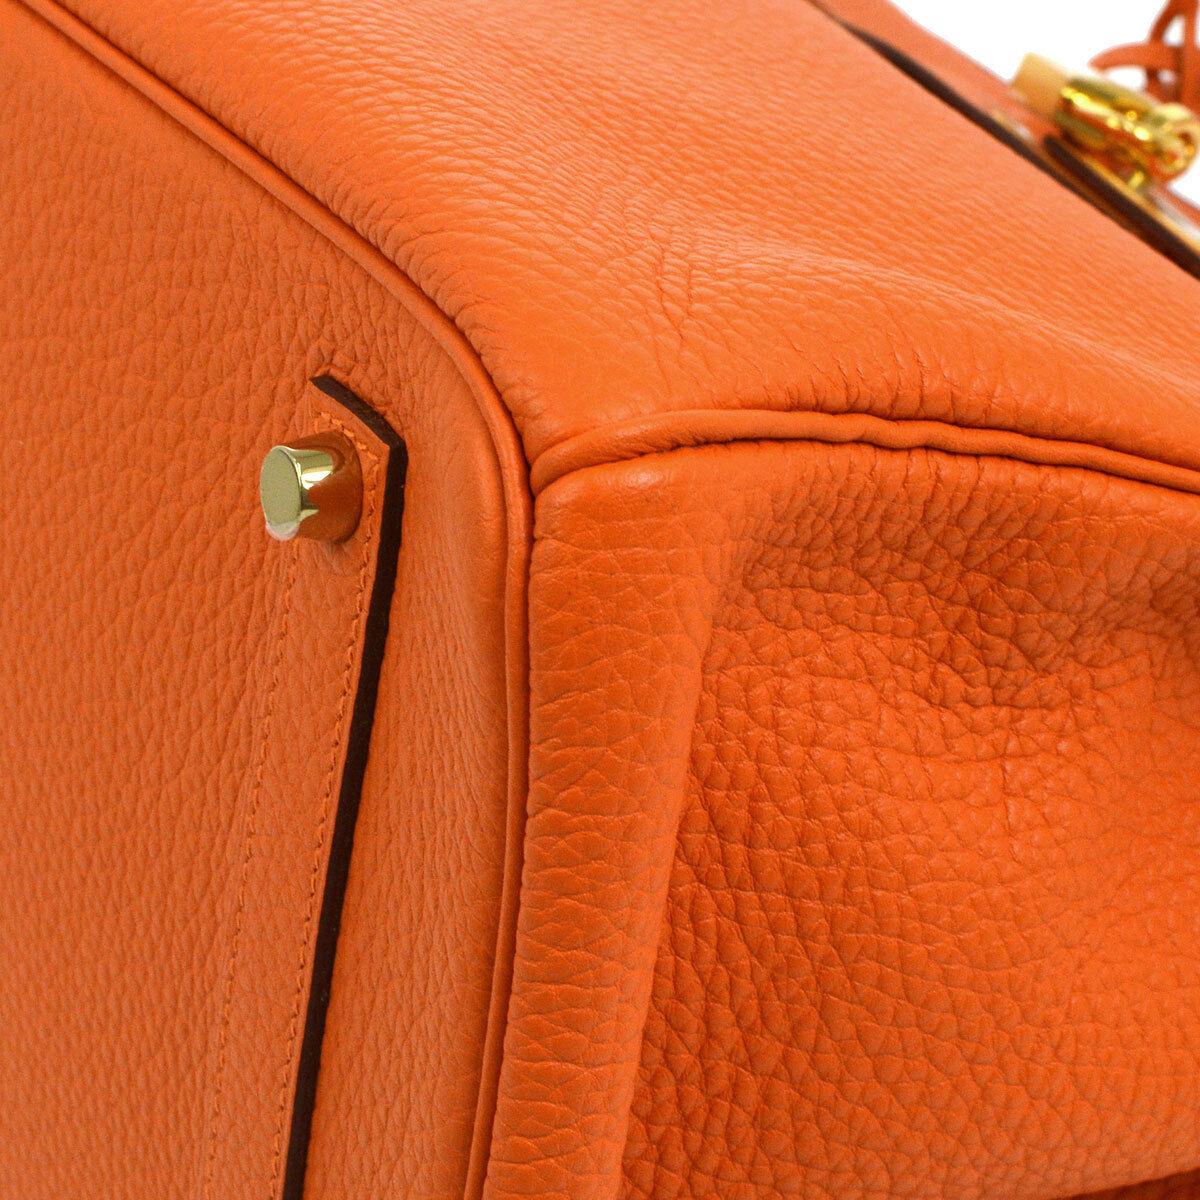 Hermes Birkin 35 Orange Leather Gold Top Handle Satchel Travel Tote Bag in Box 4